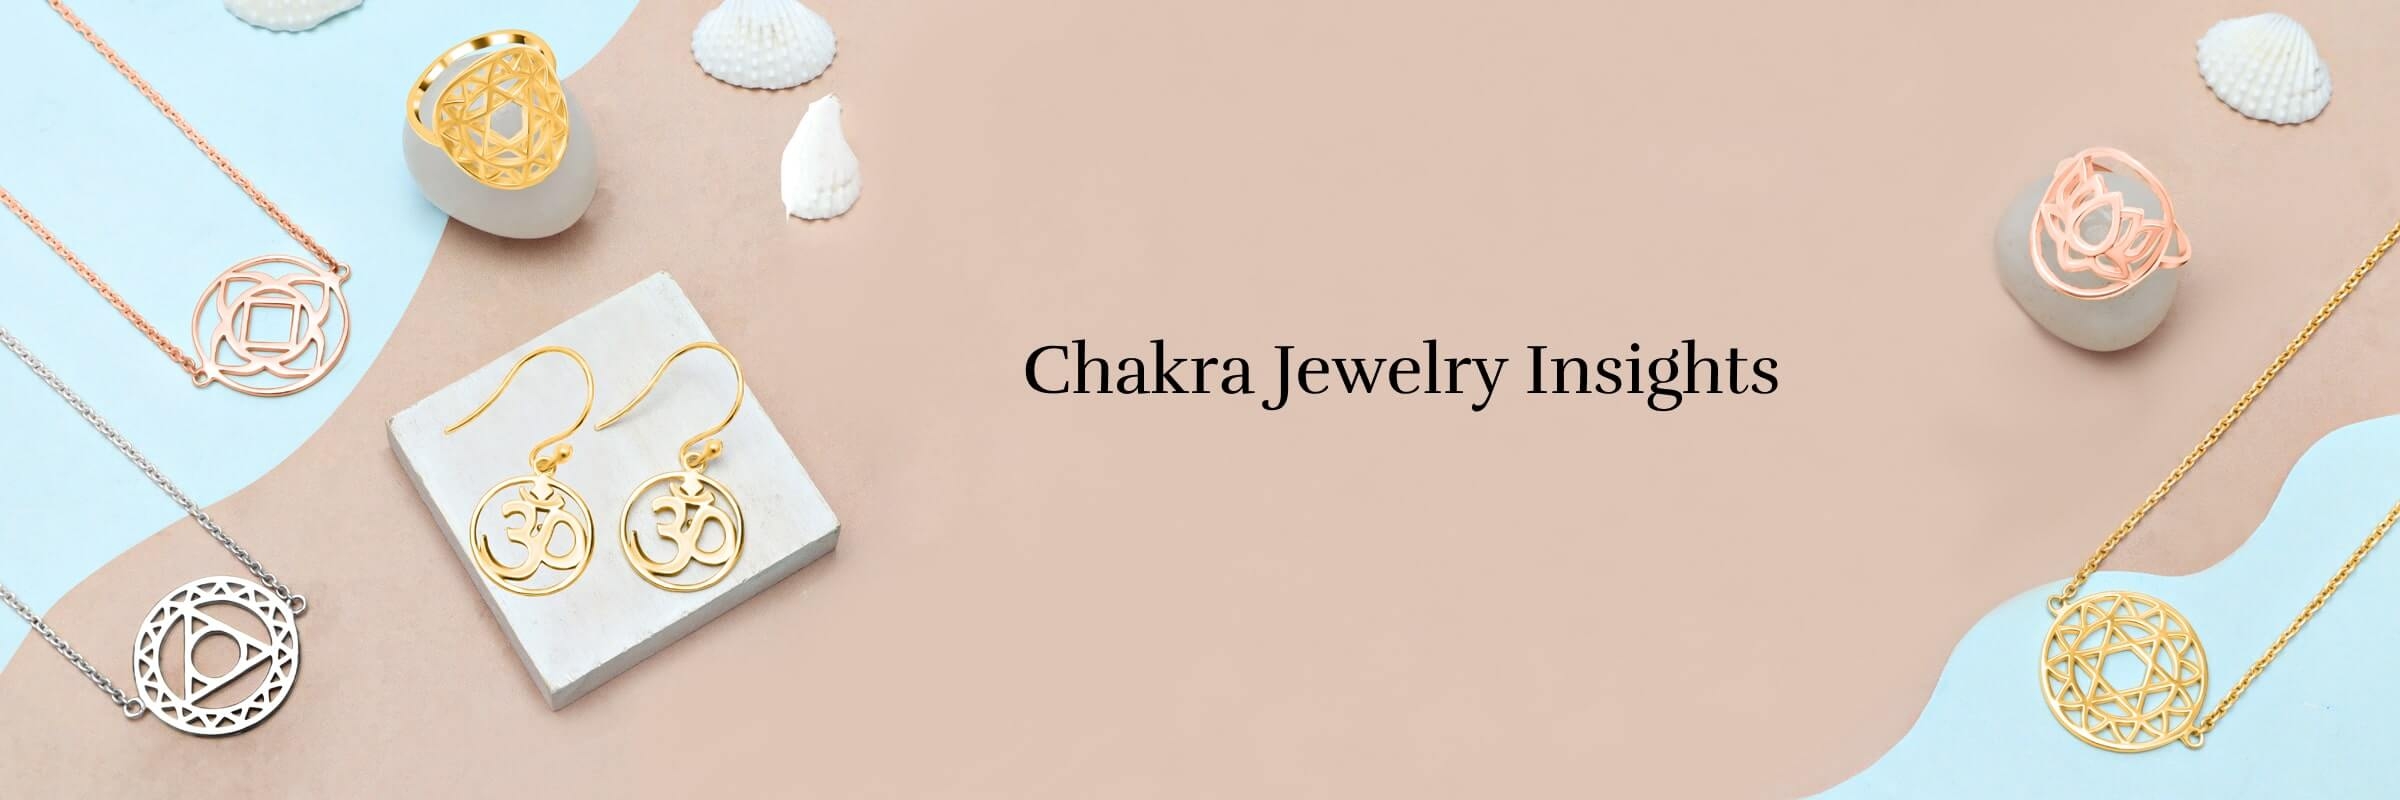 Chakra Jewelry Colors, Healing Properties And Benefits